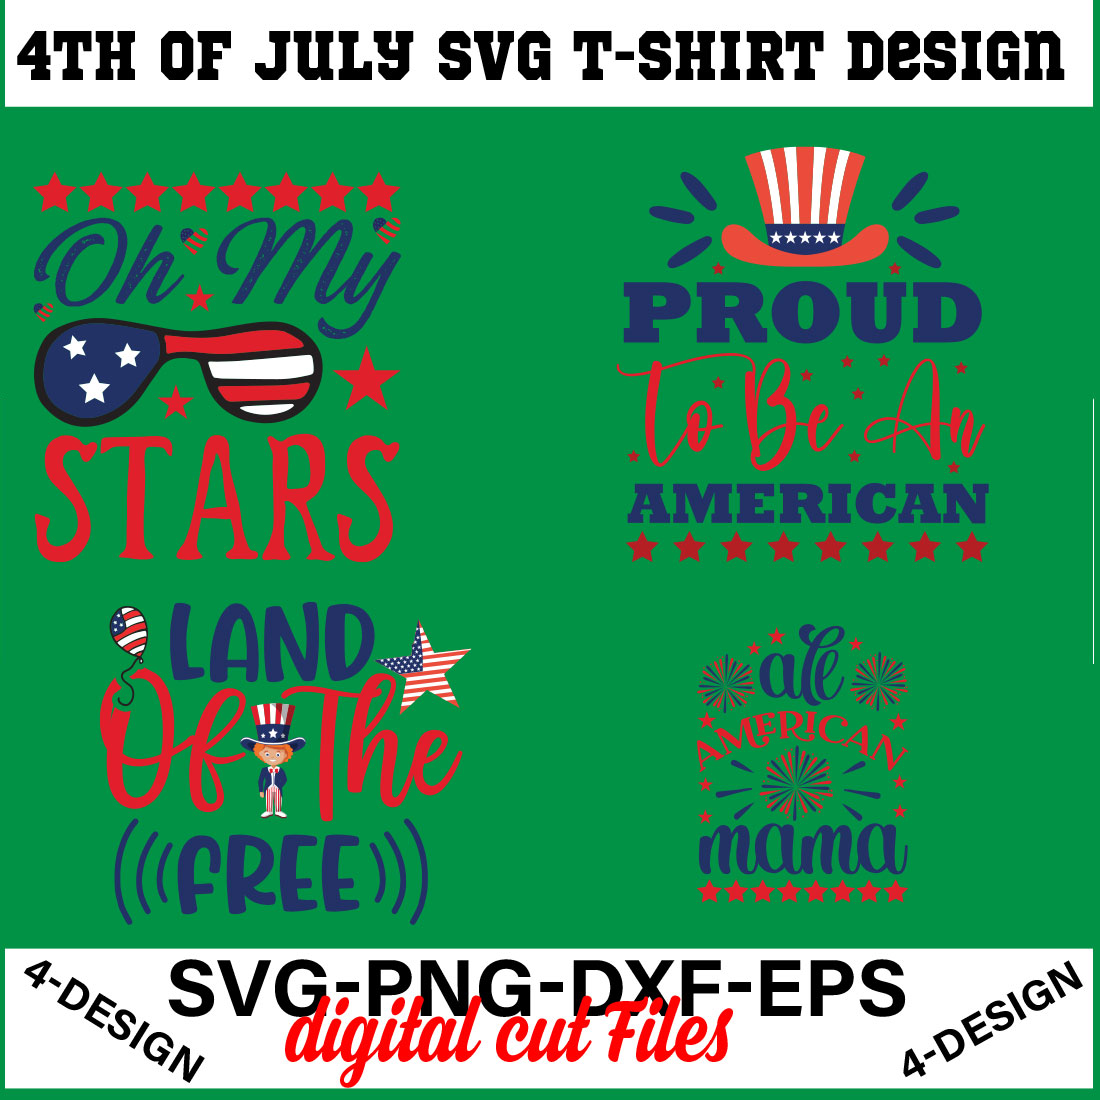 4th of July SVG Bundle, July 4th SVG, Fourth of July svg, America svg Volume-02 cover image.